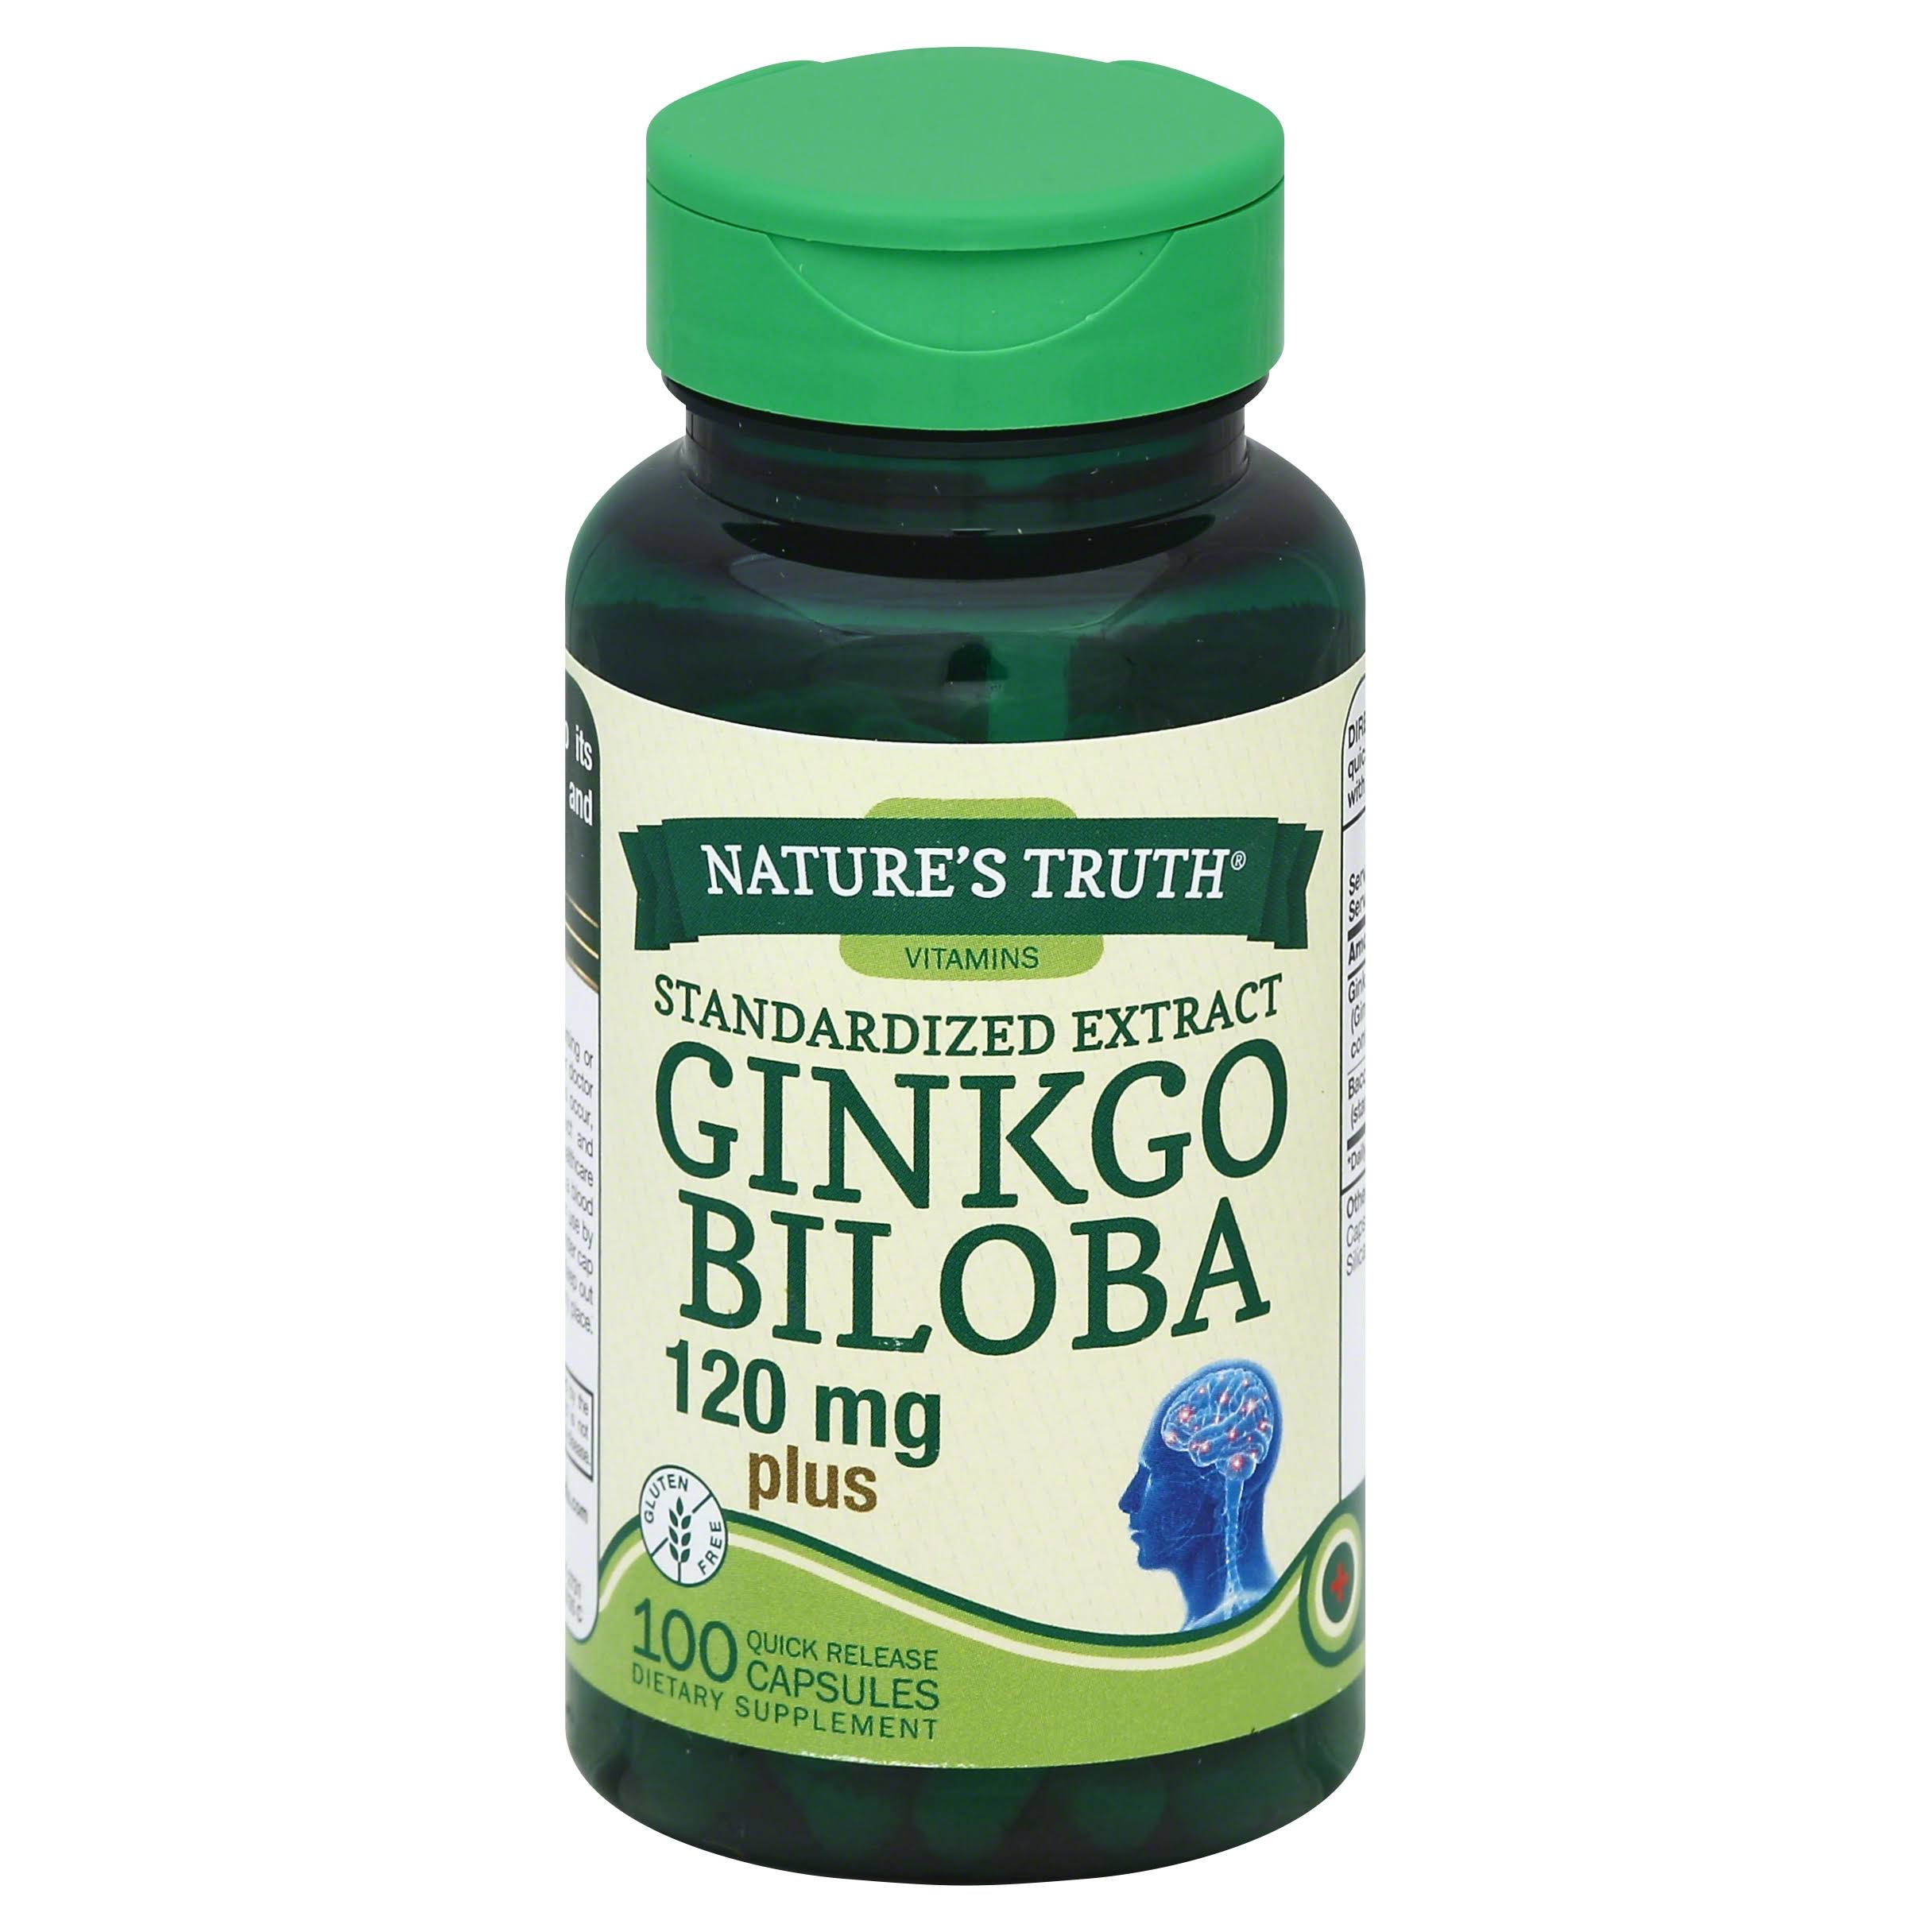 Nature's Truth Ginkgo Biloba Standardized Extract Vitamins - 100ct, 120mg